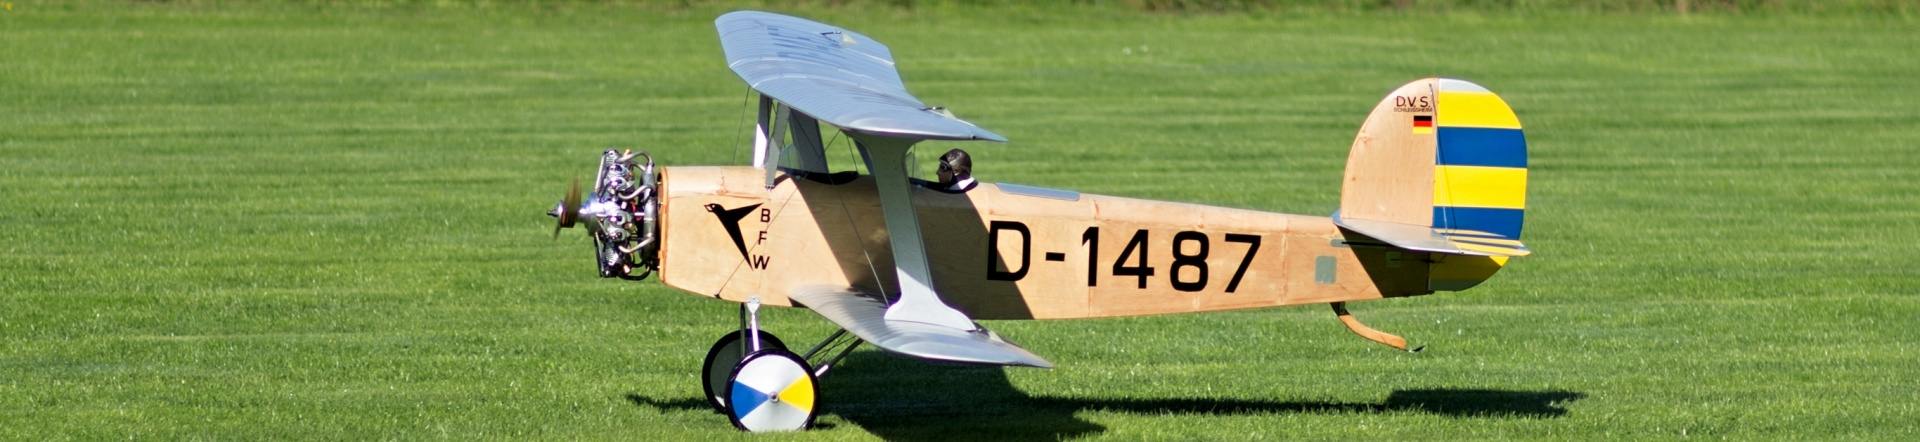 Modellflugzeug Doppeldecker bei der Landung